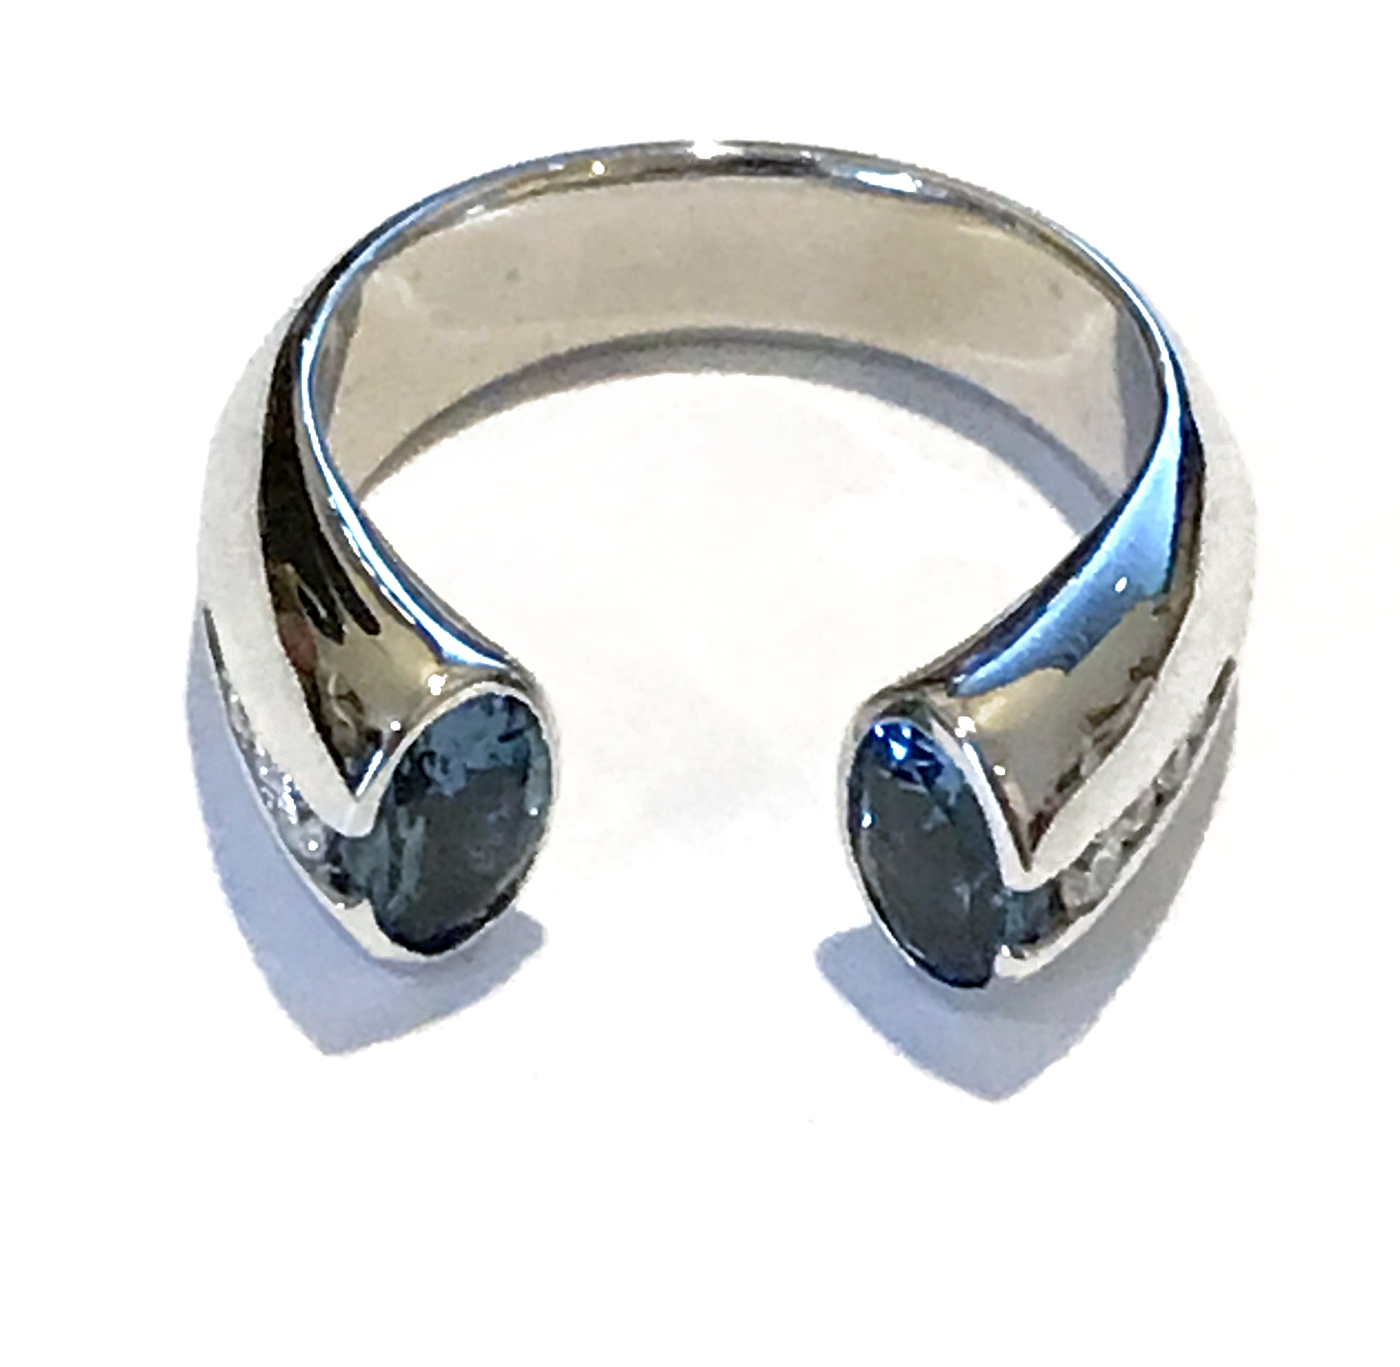 RING 975 - Aquamarine and Diamonds in 18kt White Gold - Michael Alexander  Jewelry